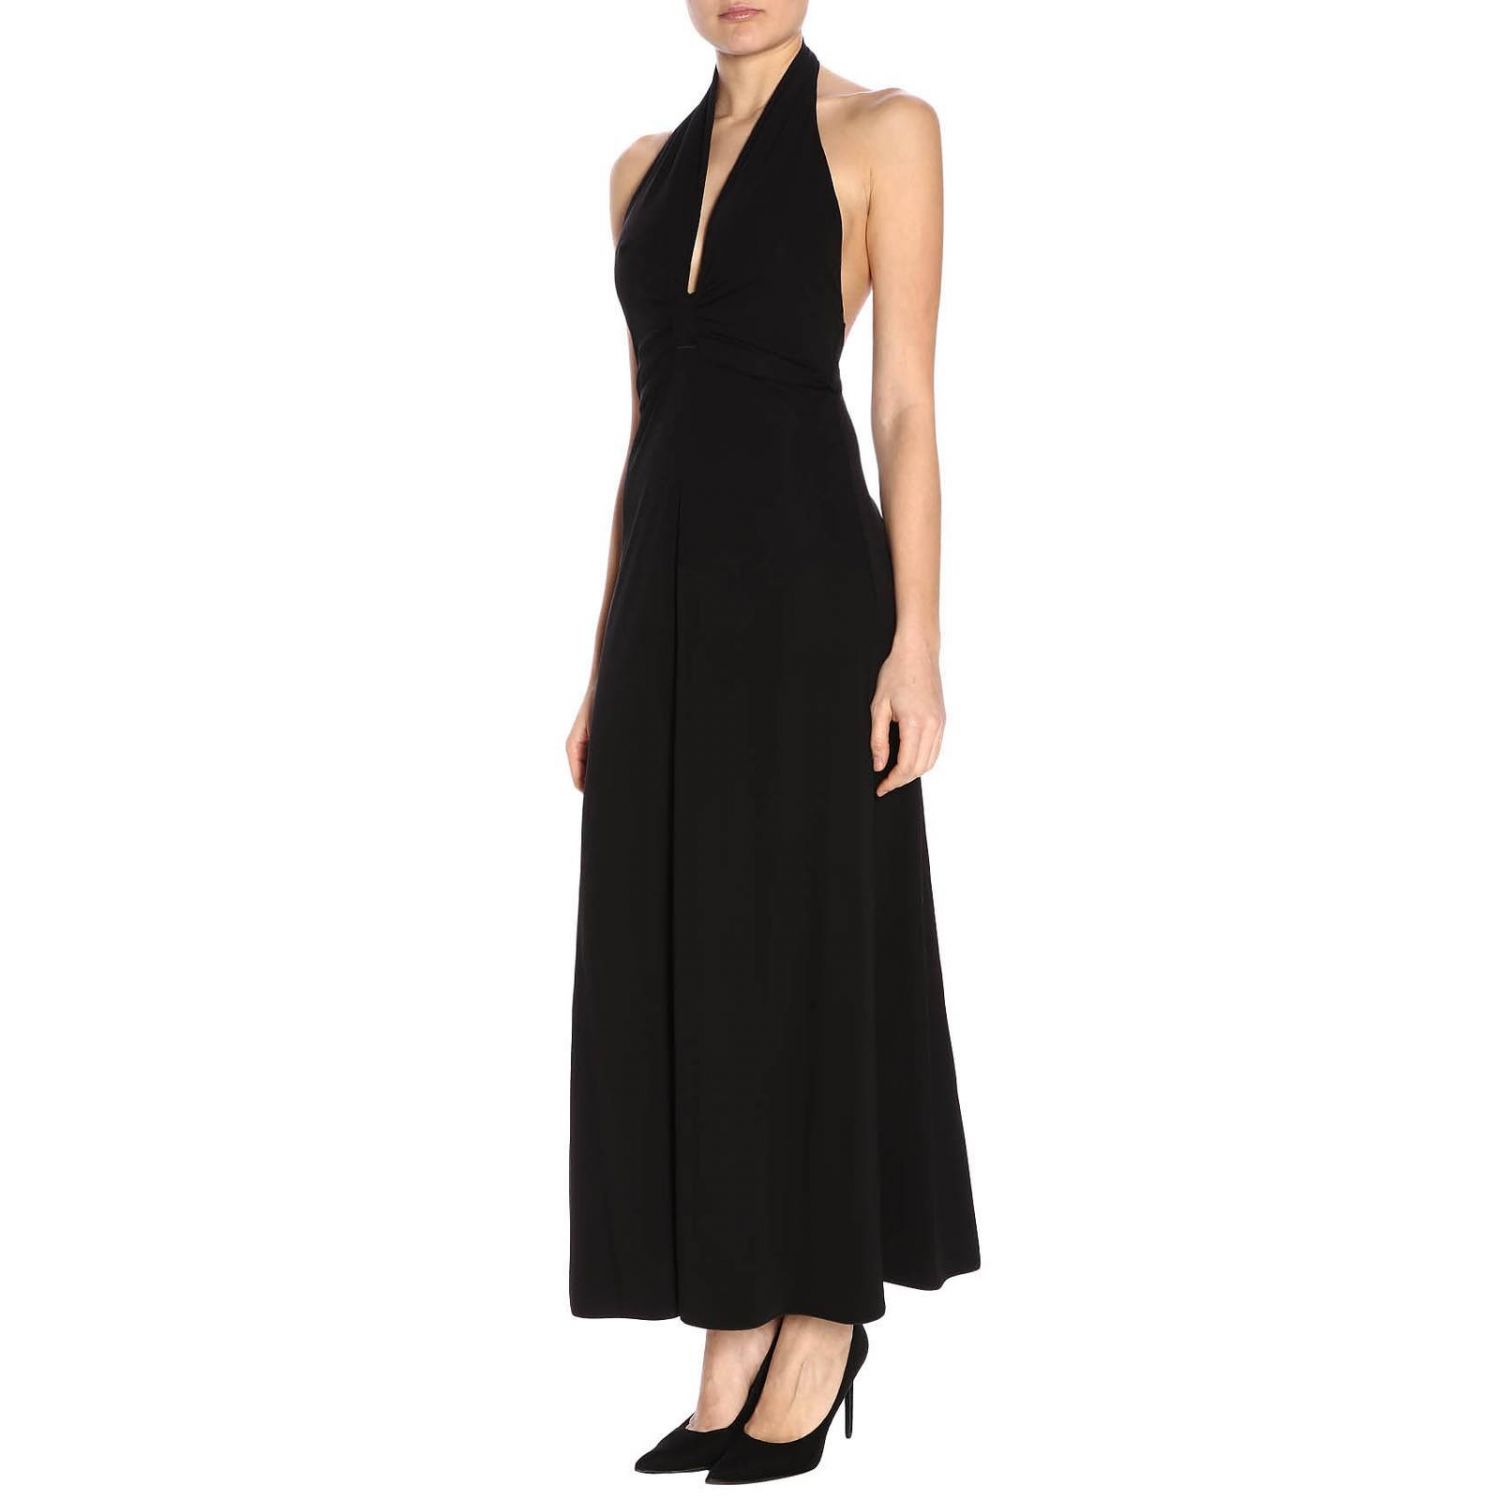 Giorgio Armani Outlet: dress for woman - Black | Giorgio Armani dress ...